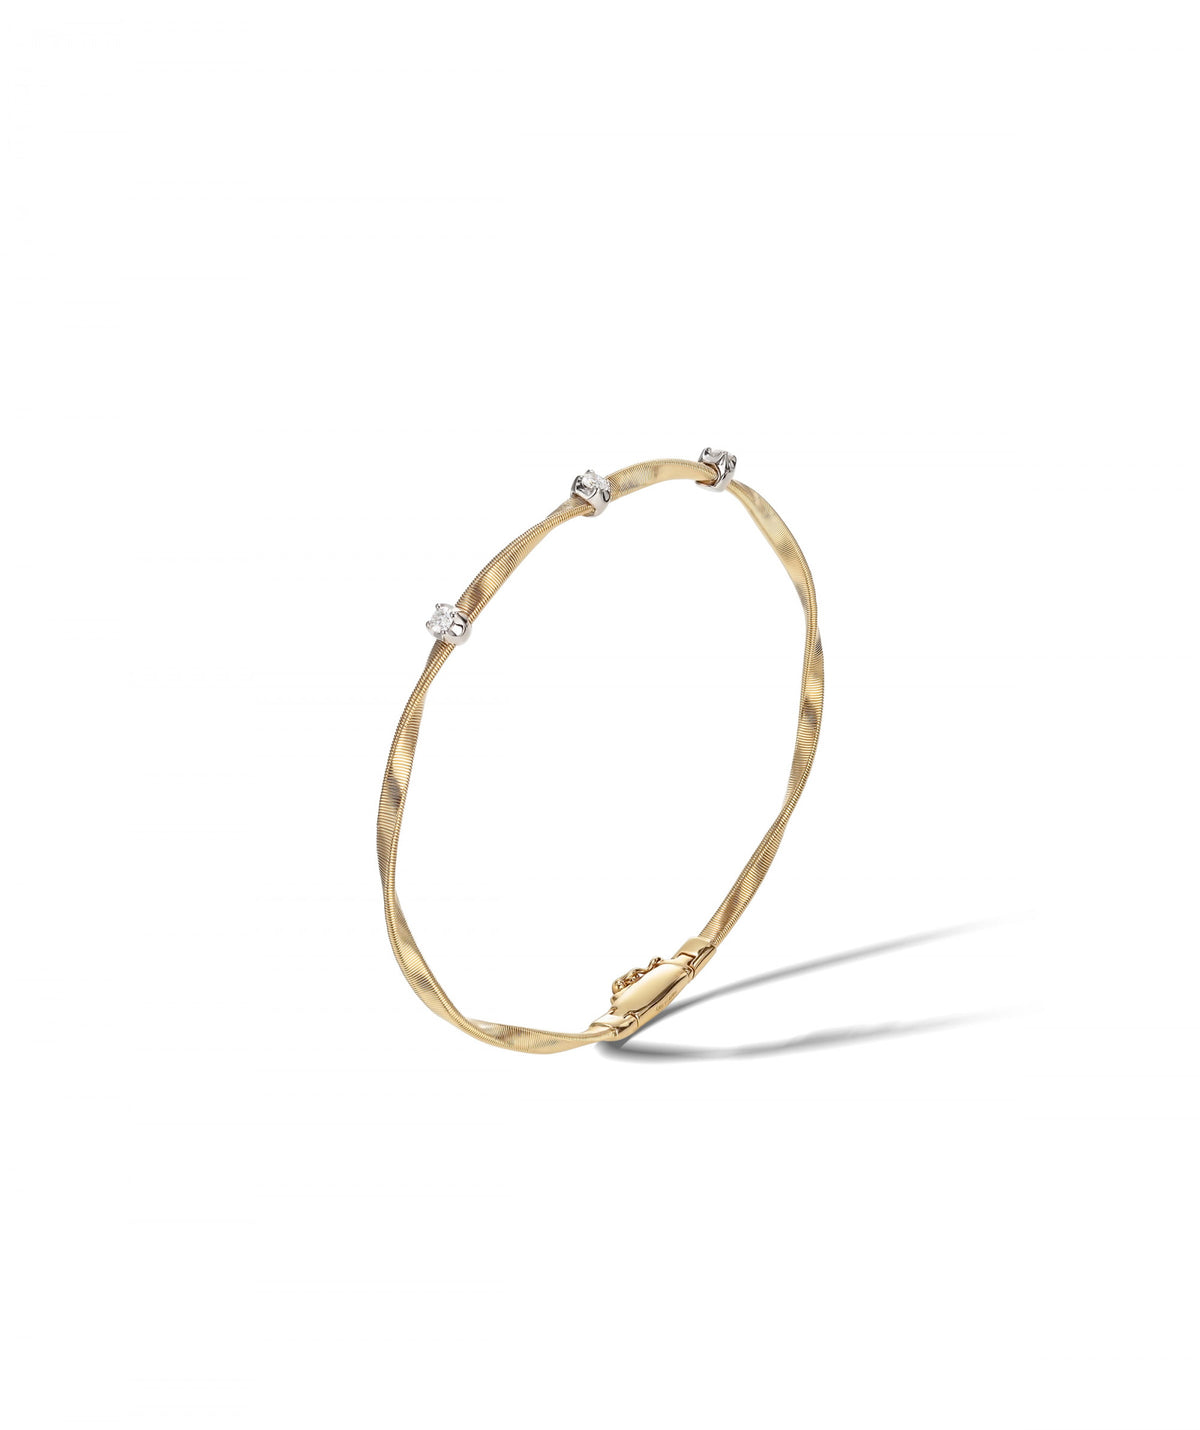 Marrakech Bracelet in 18k Yellow Gold with Diamonds Single Strand - Orsini Jewellers NZ